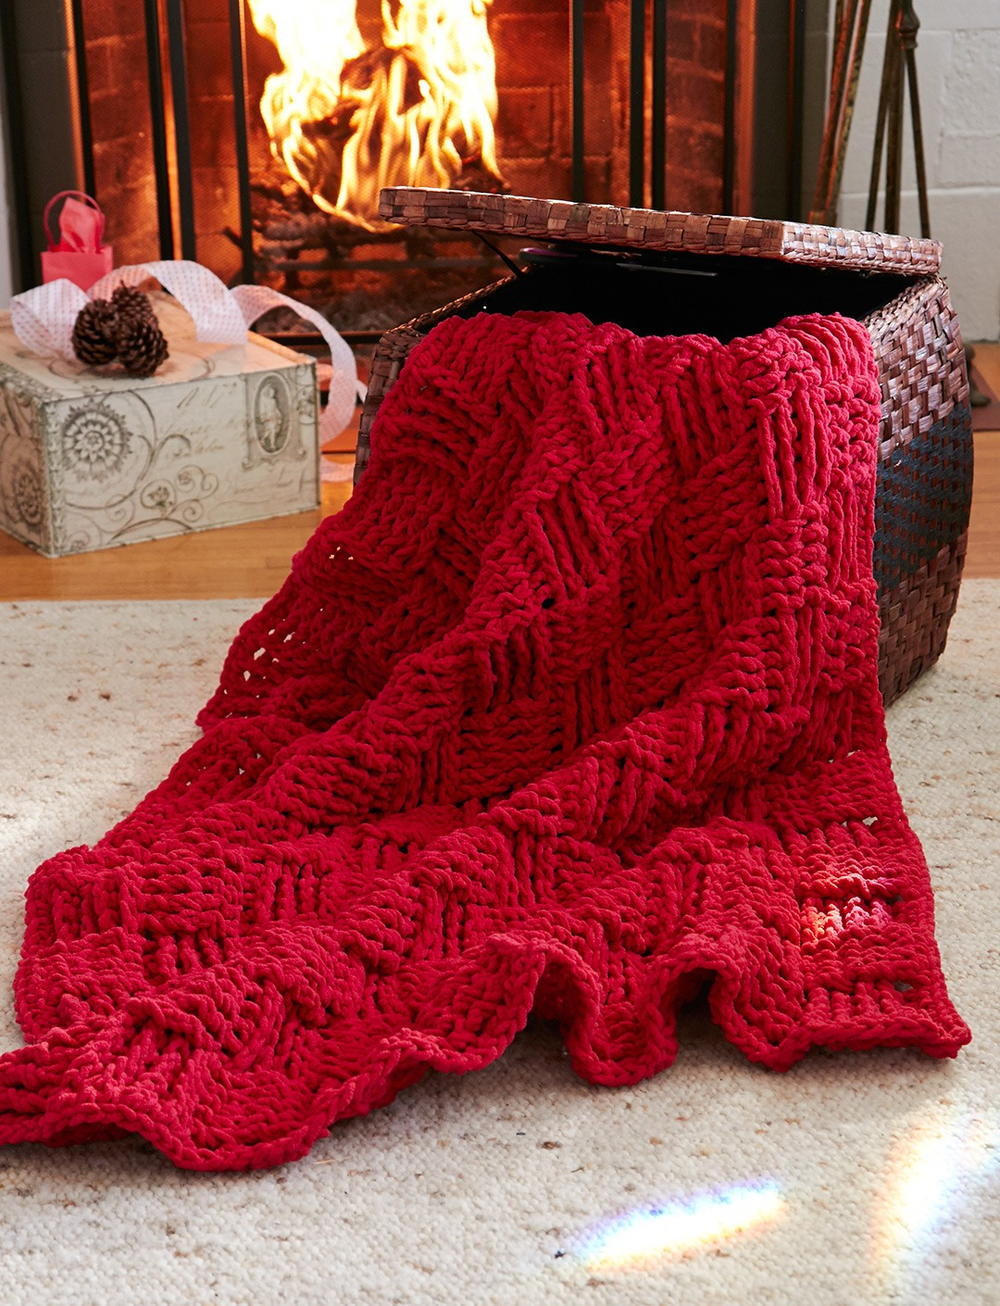 Extra Large Blanket Basket - Home Ideas